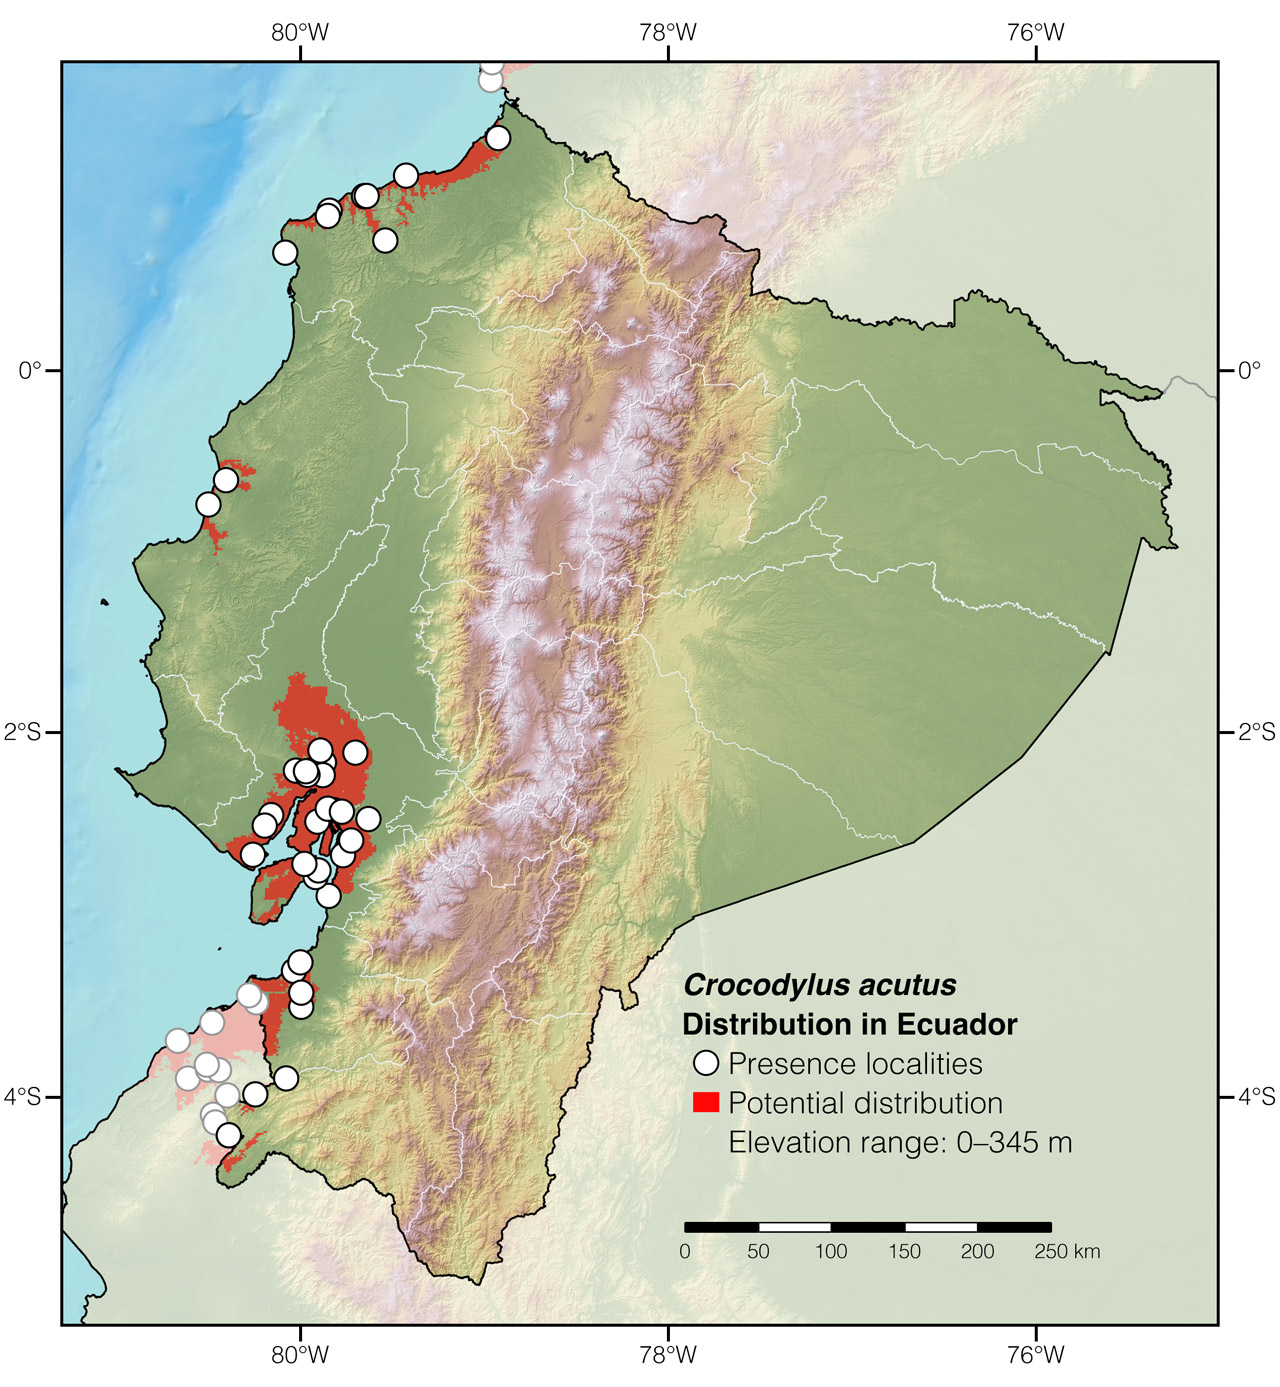 Distribution of Crocodylus acutus in Ecuador